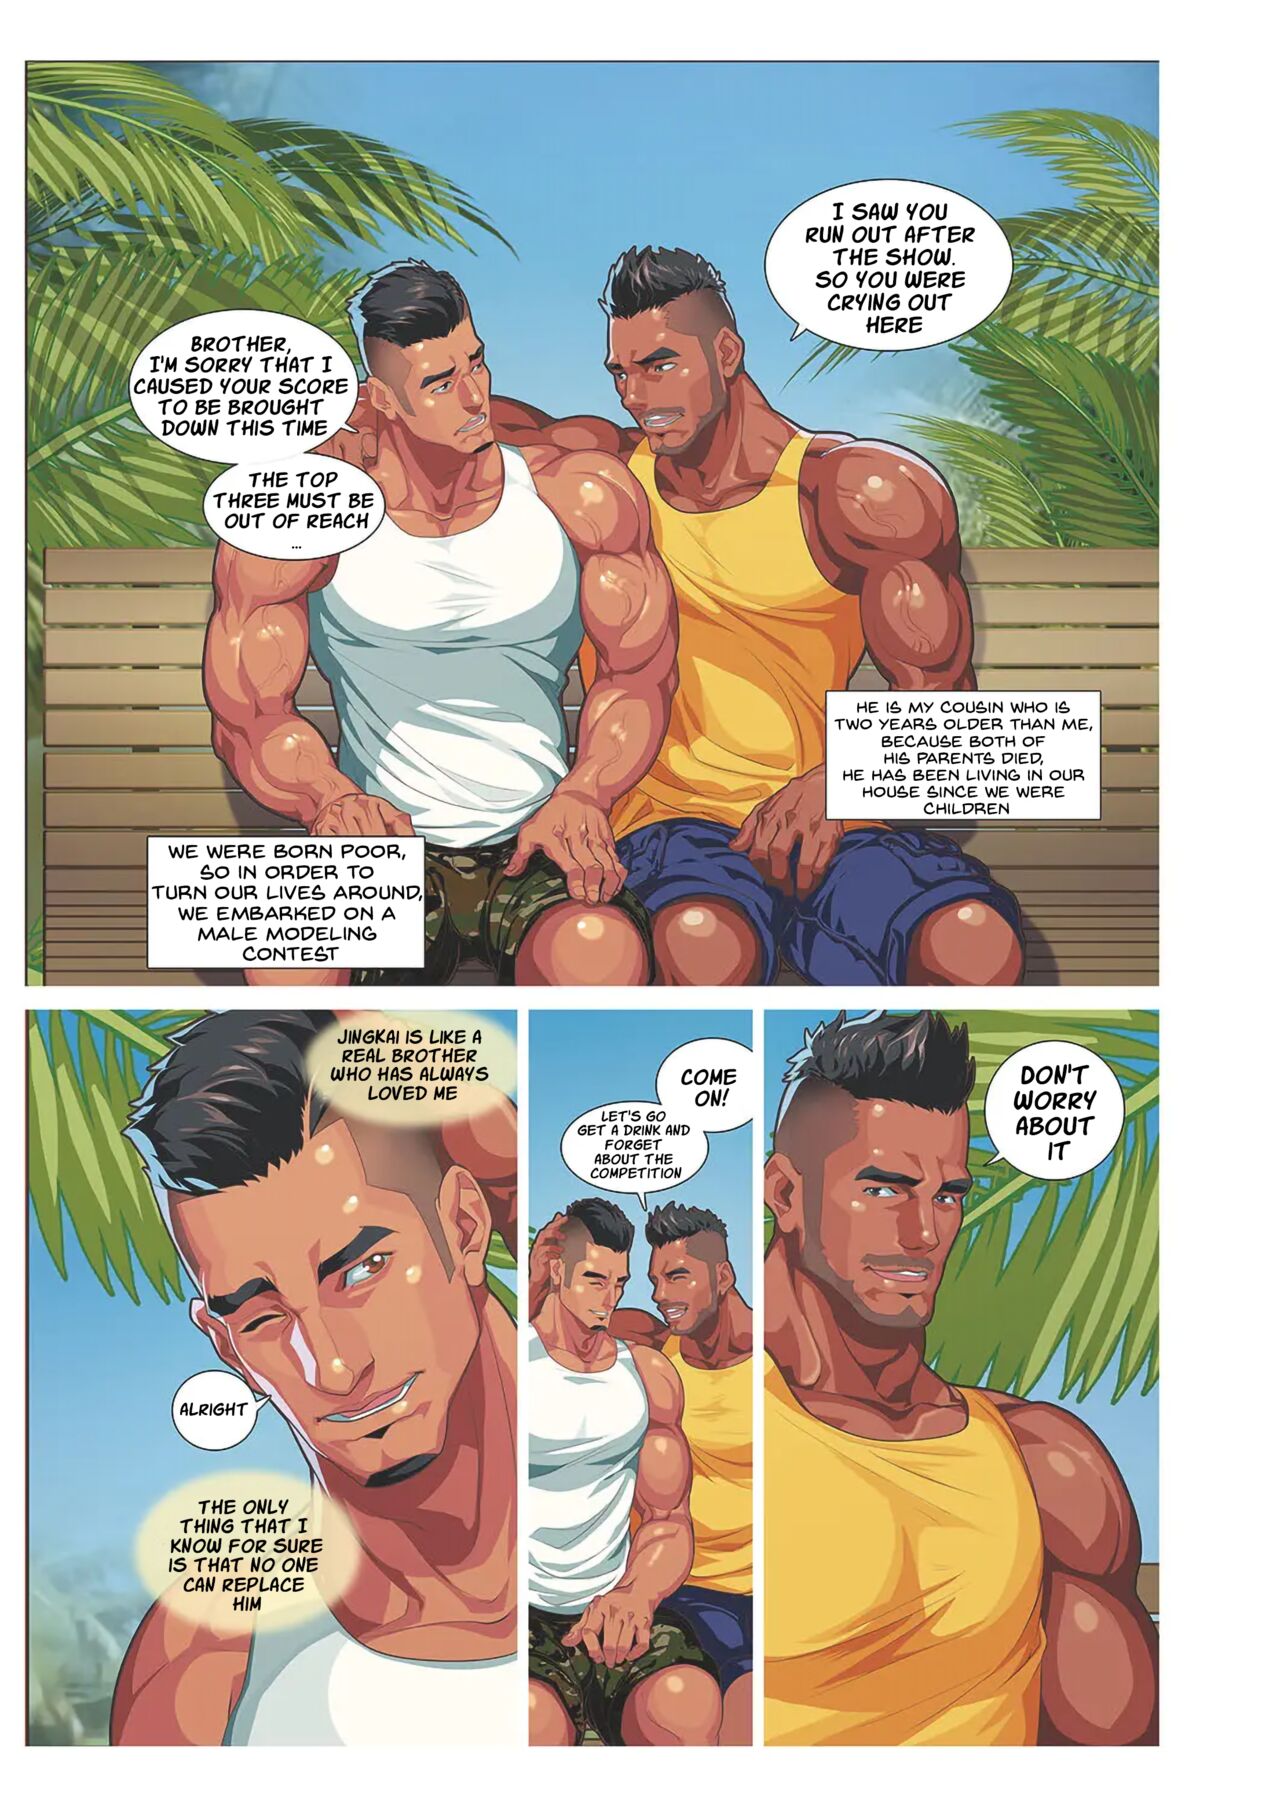 Read Sexy Xiong Summer Men Vol Muscle Milk Bath English Digital